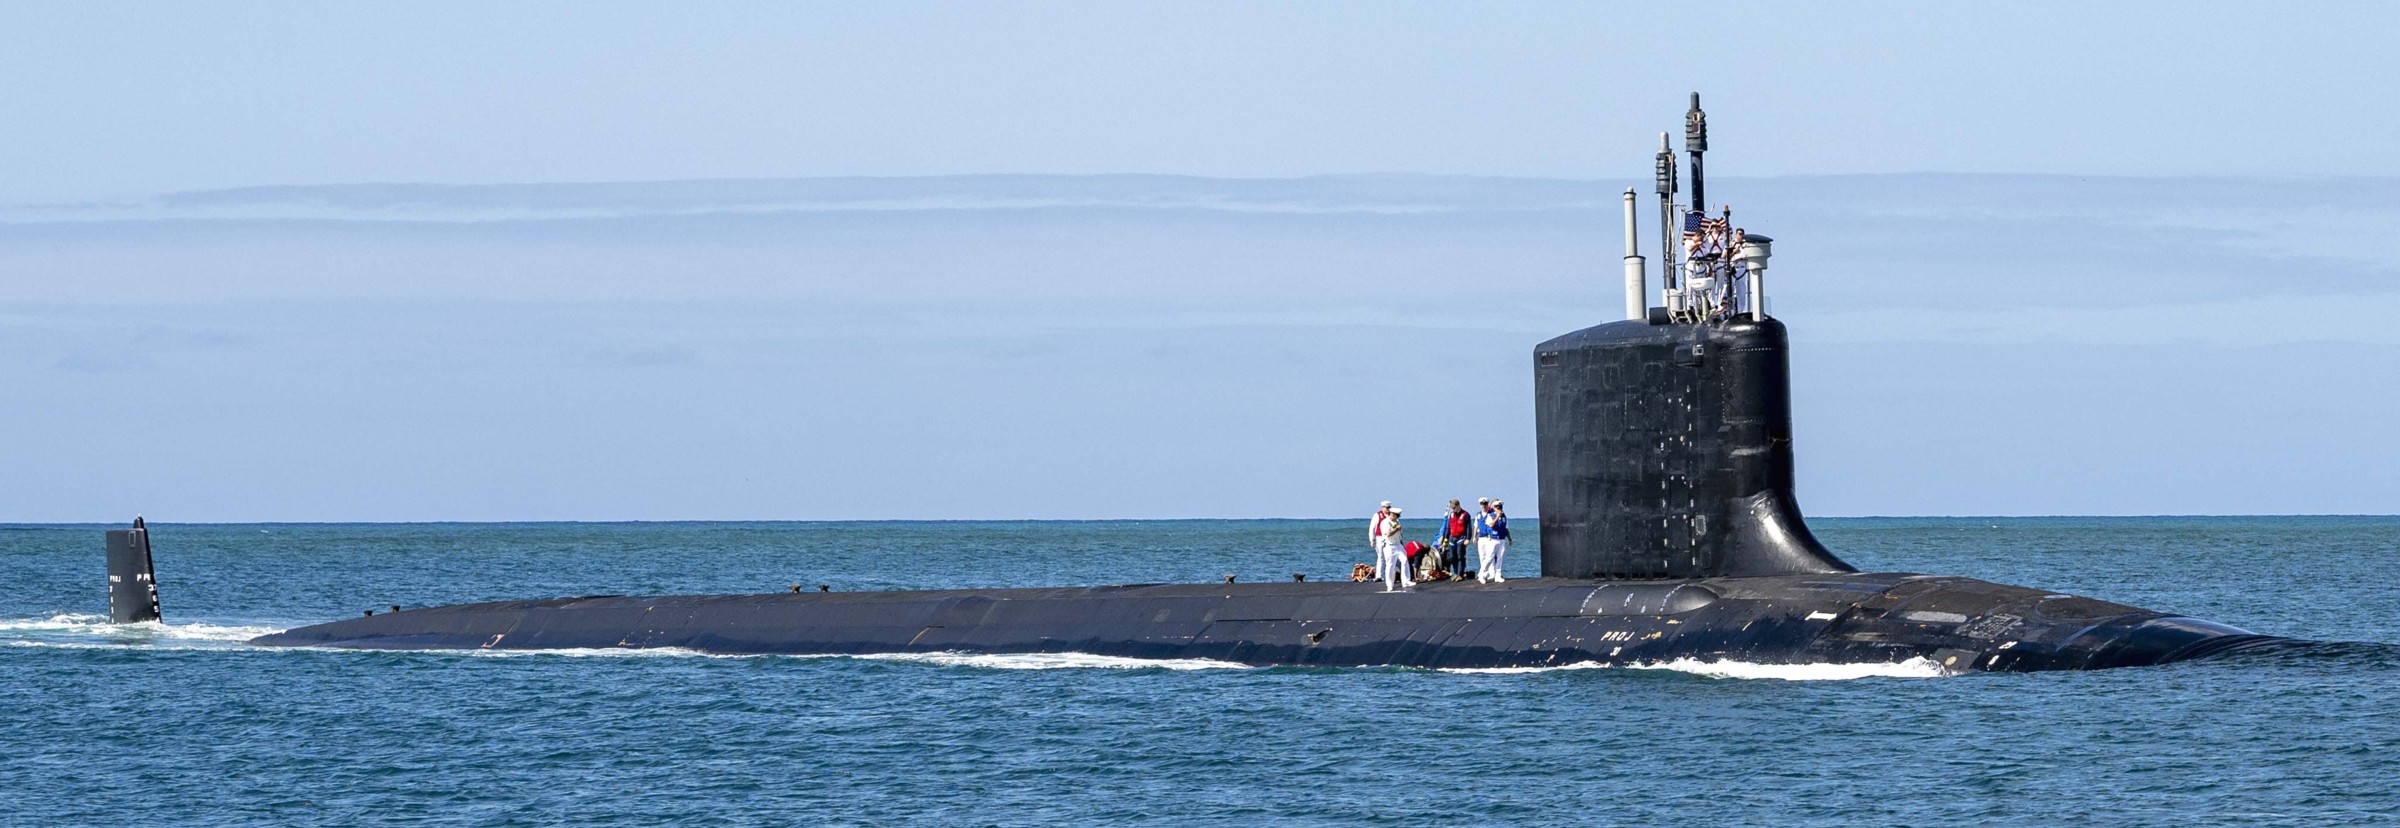 ssn-792 uss vermont virginia class attack submarine us navy arriving pearl harbor hawaii 21